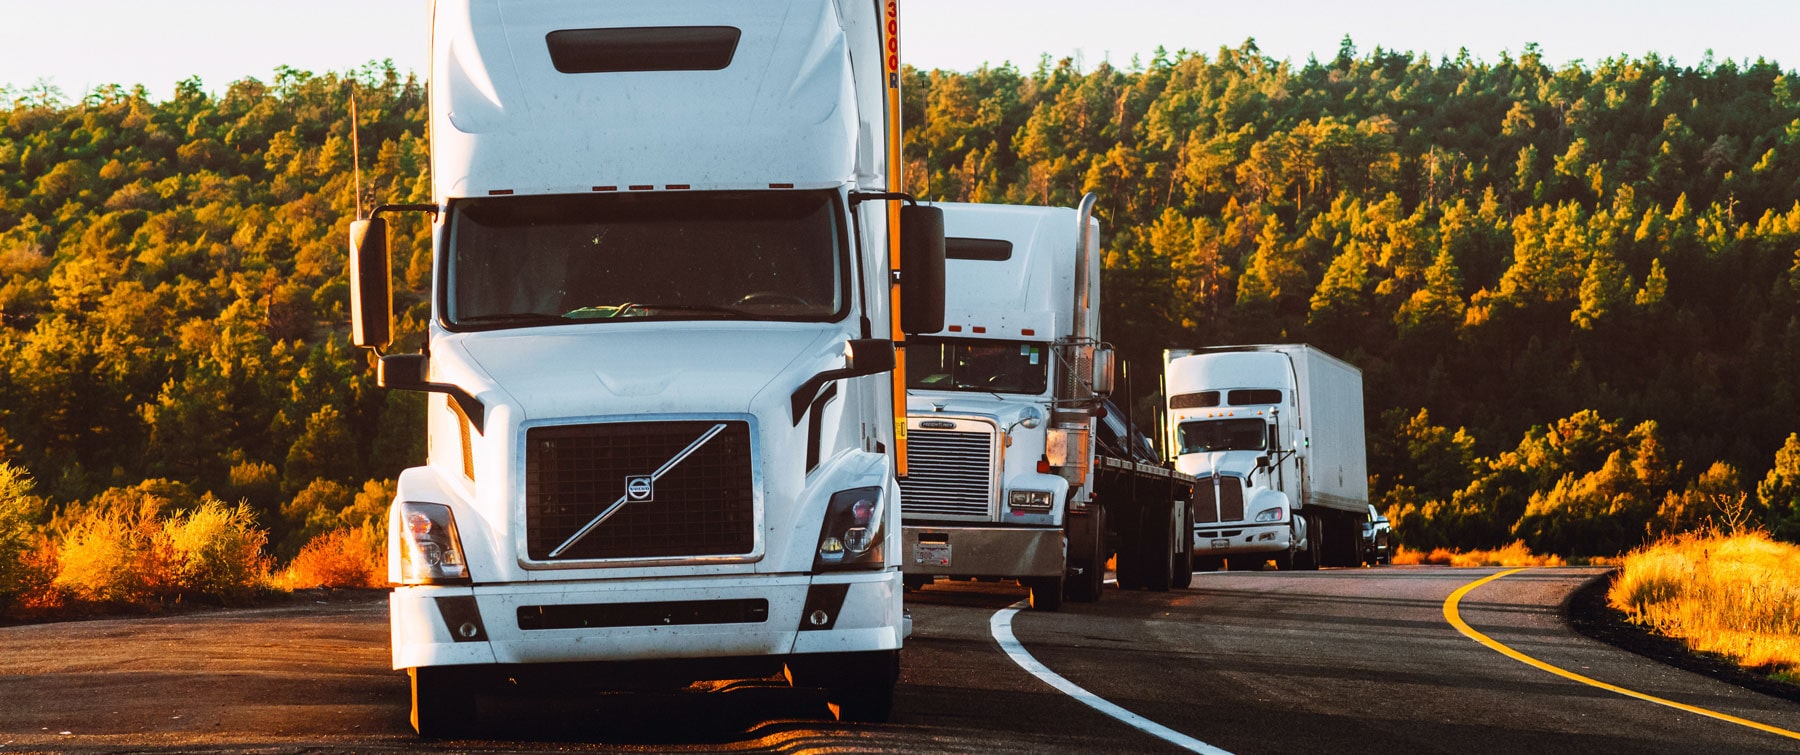 Truckload Freight Broker in Jacksonville Florida